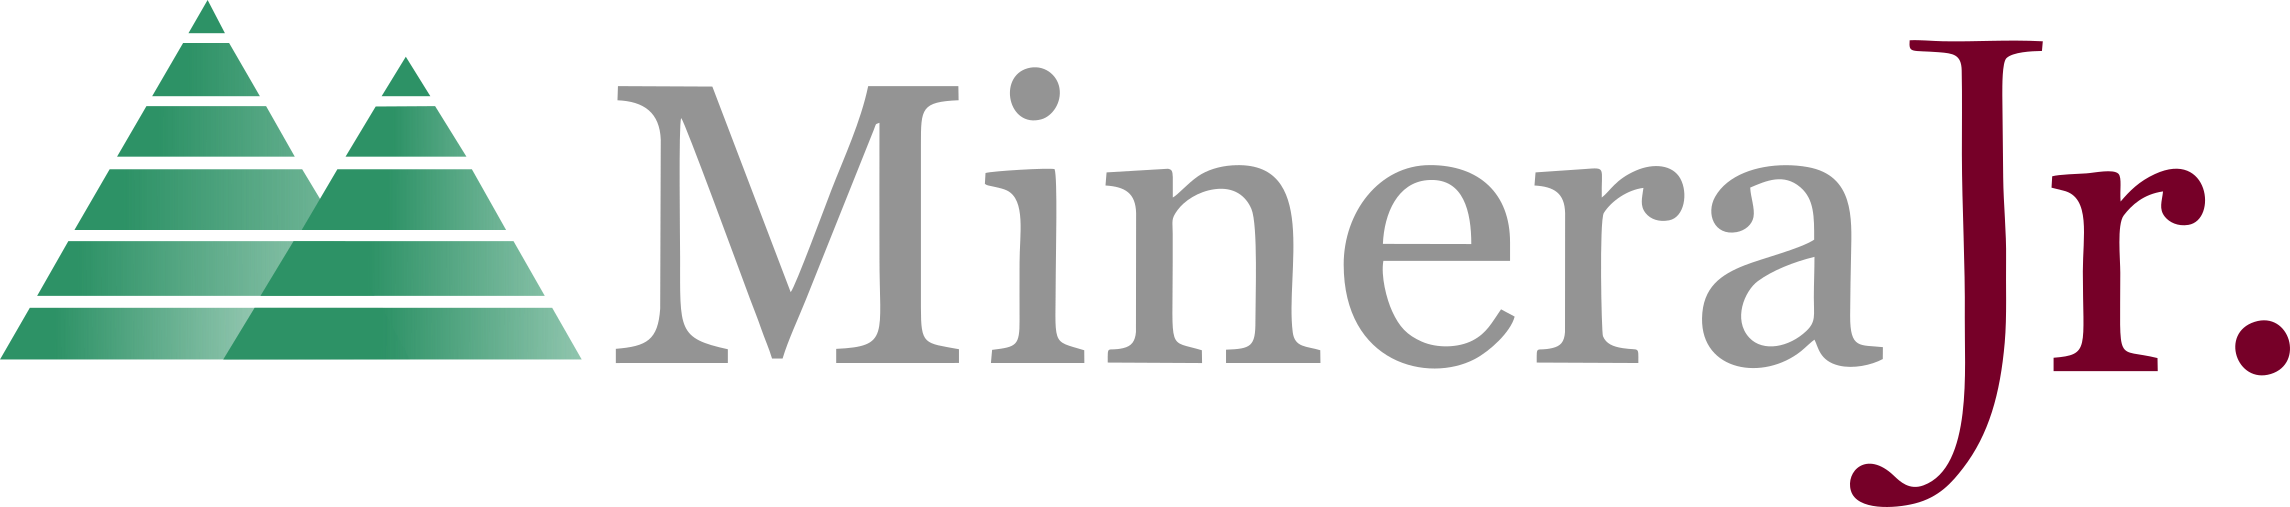 Logo marca minera